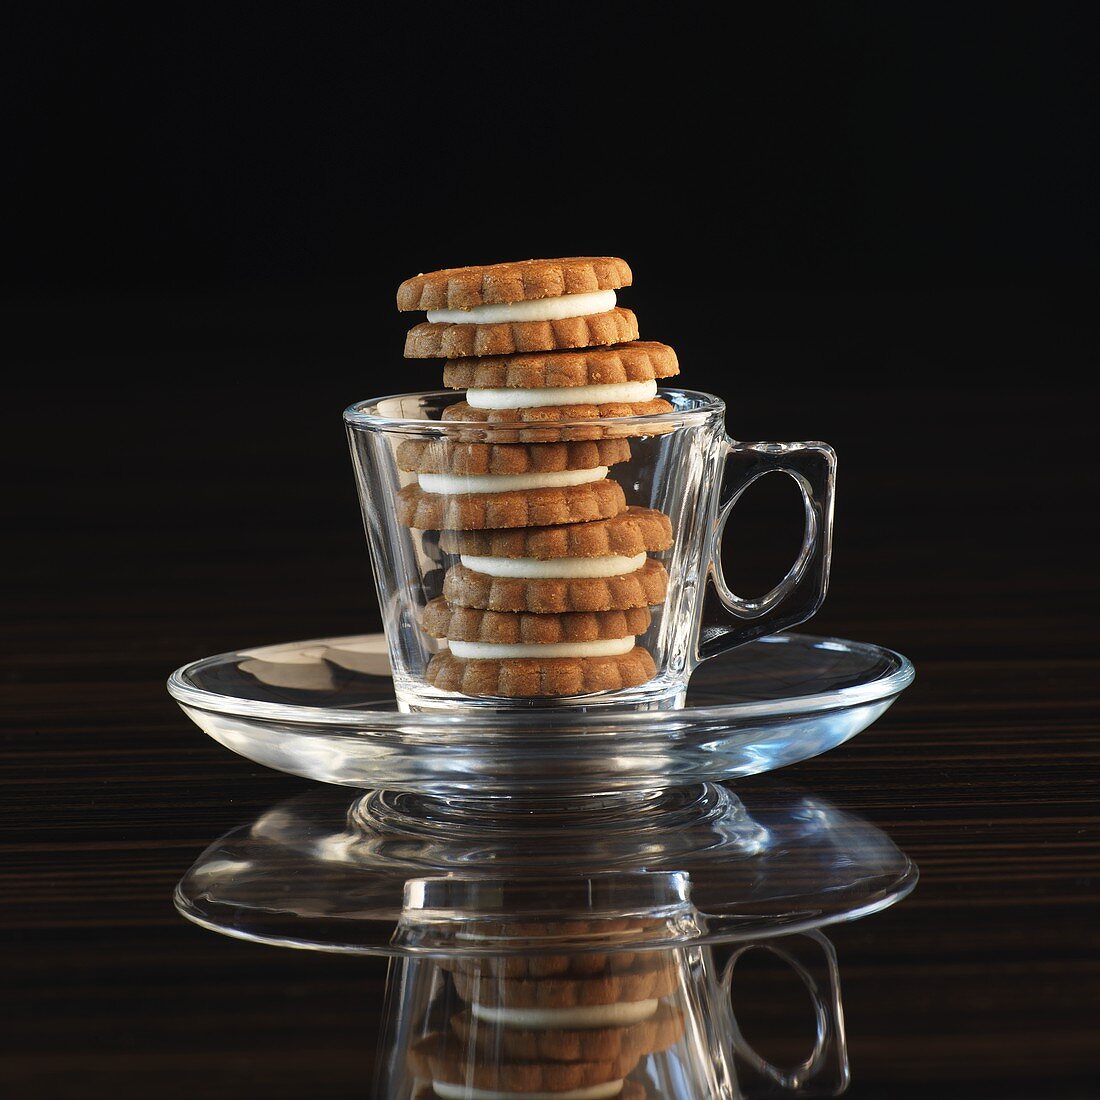 Hazelnut biscuits in an espresso cup